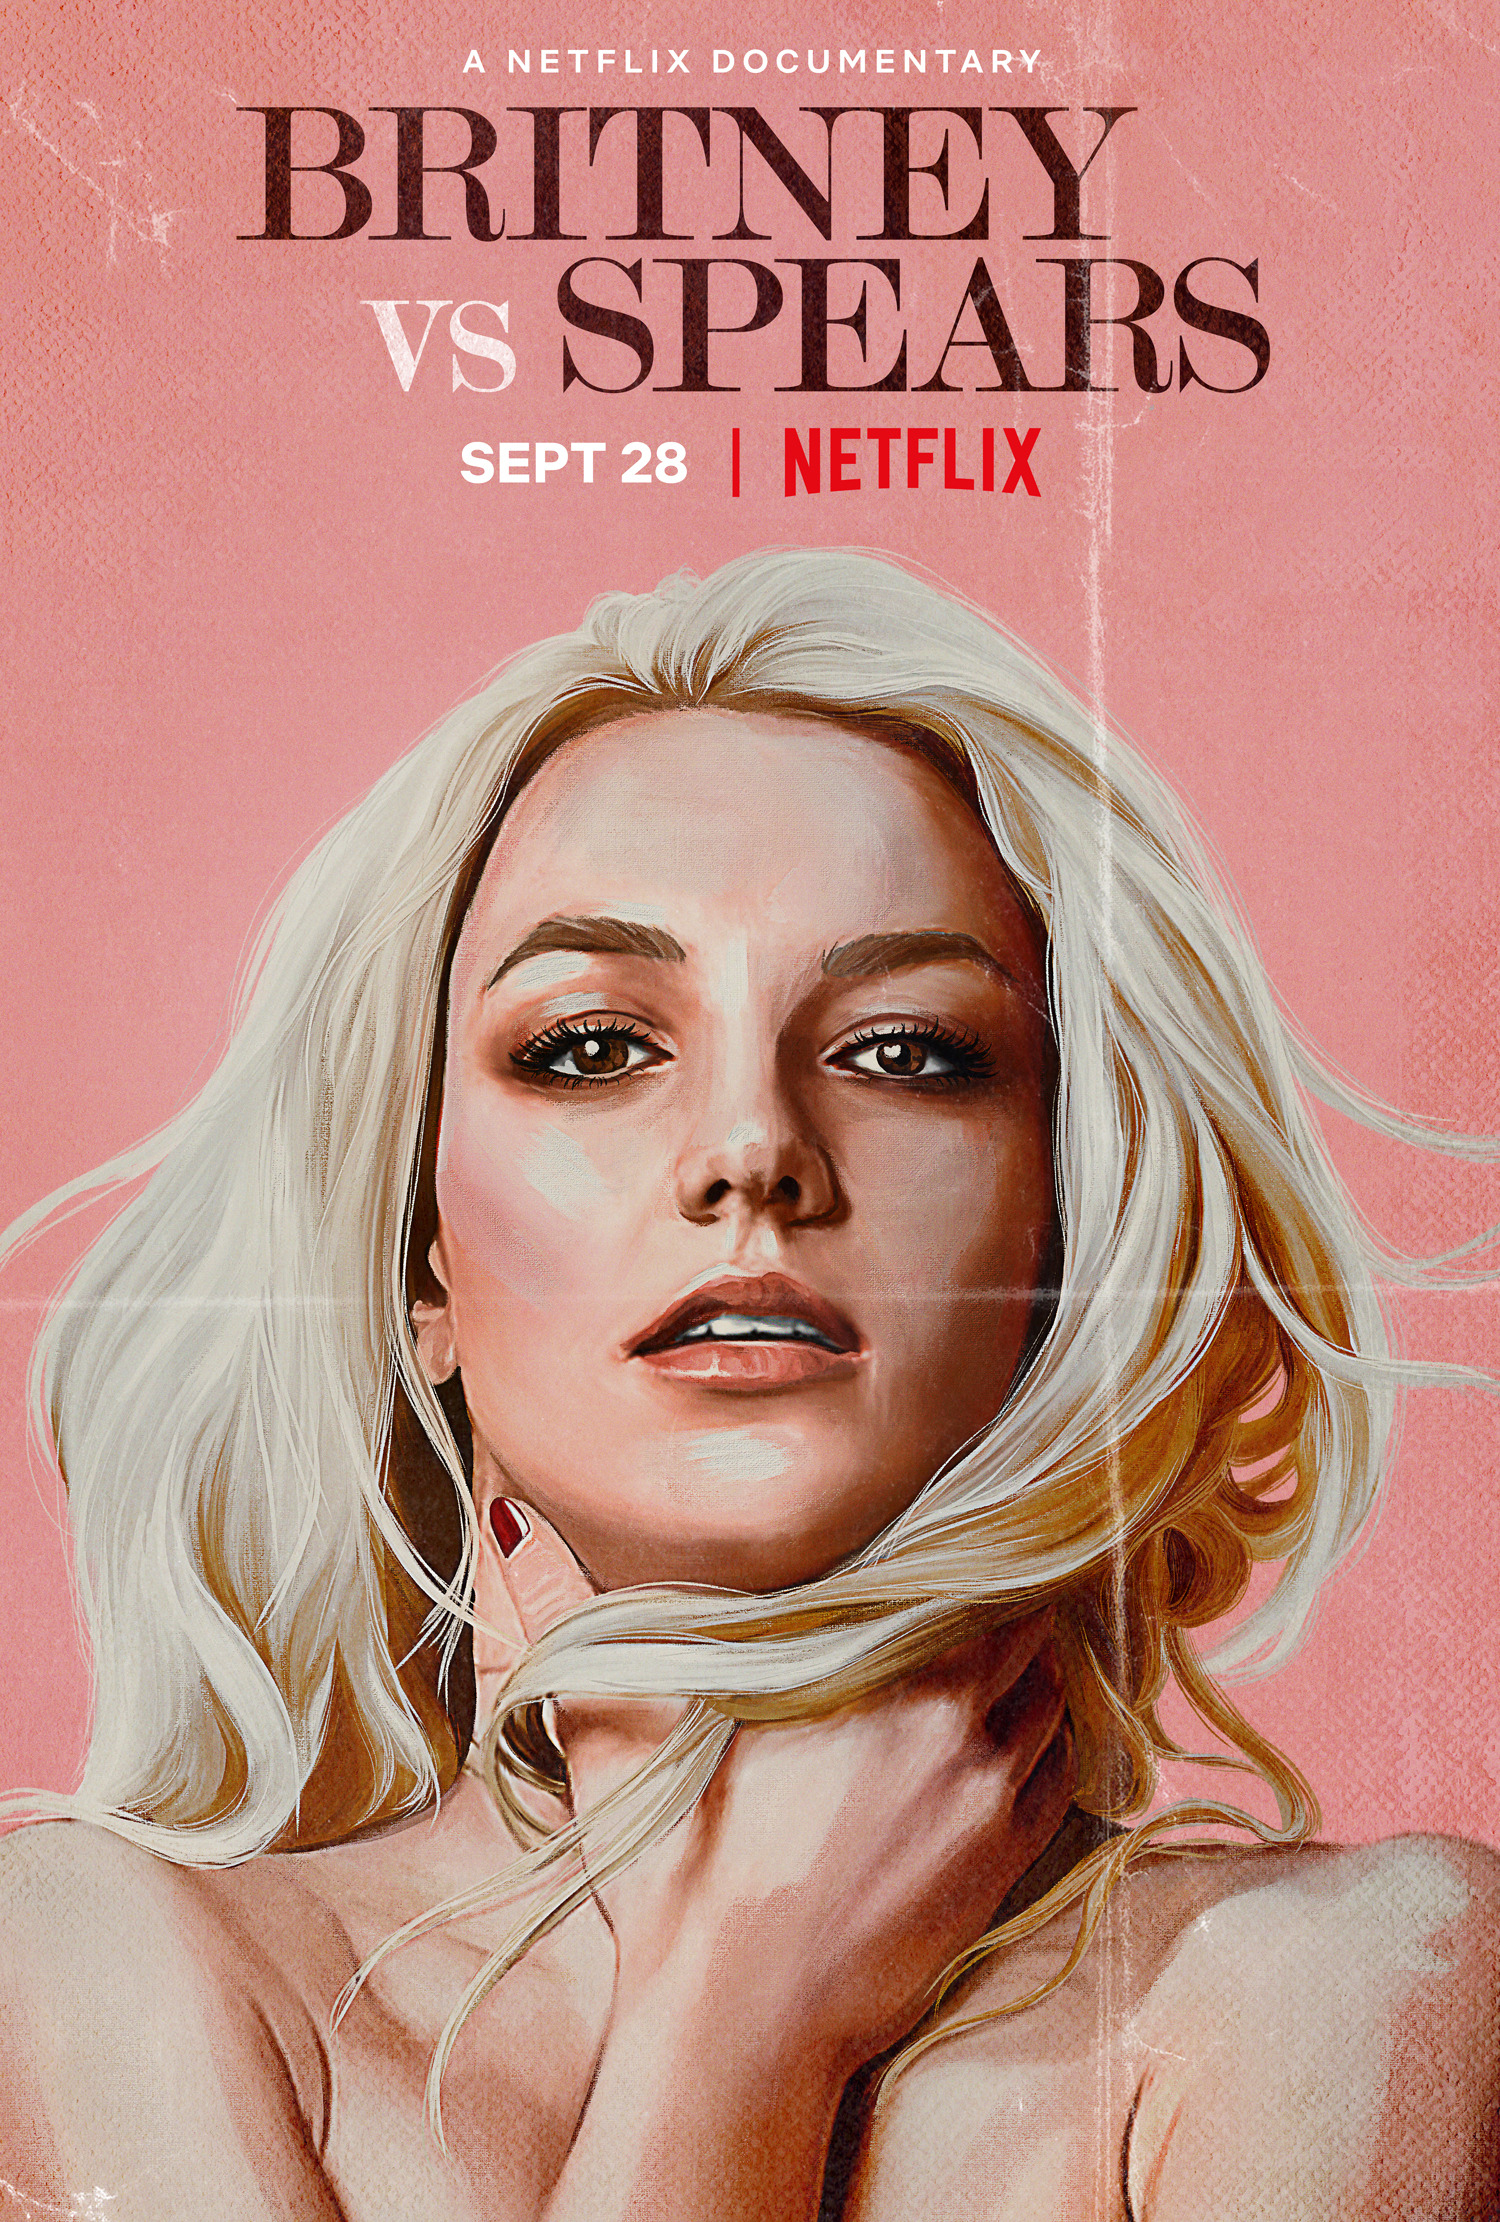 Mega Sized Movie Poster Image for Britney Vs. Spears 